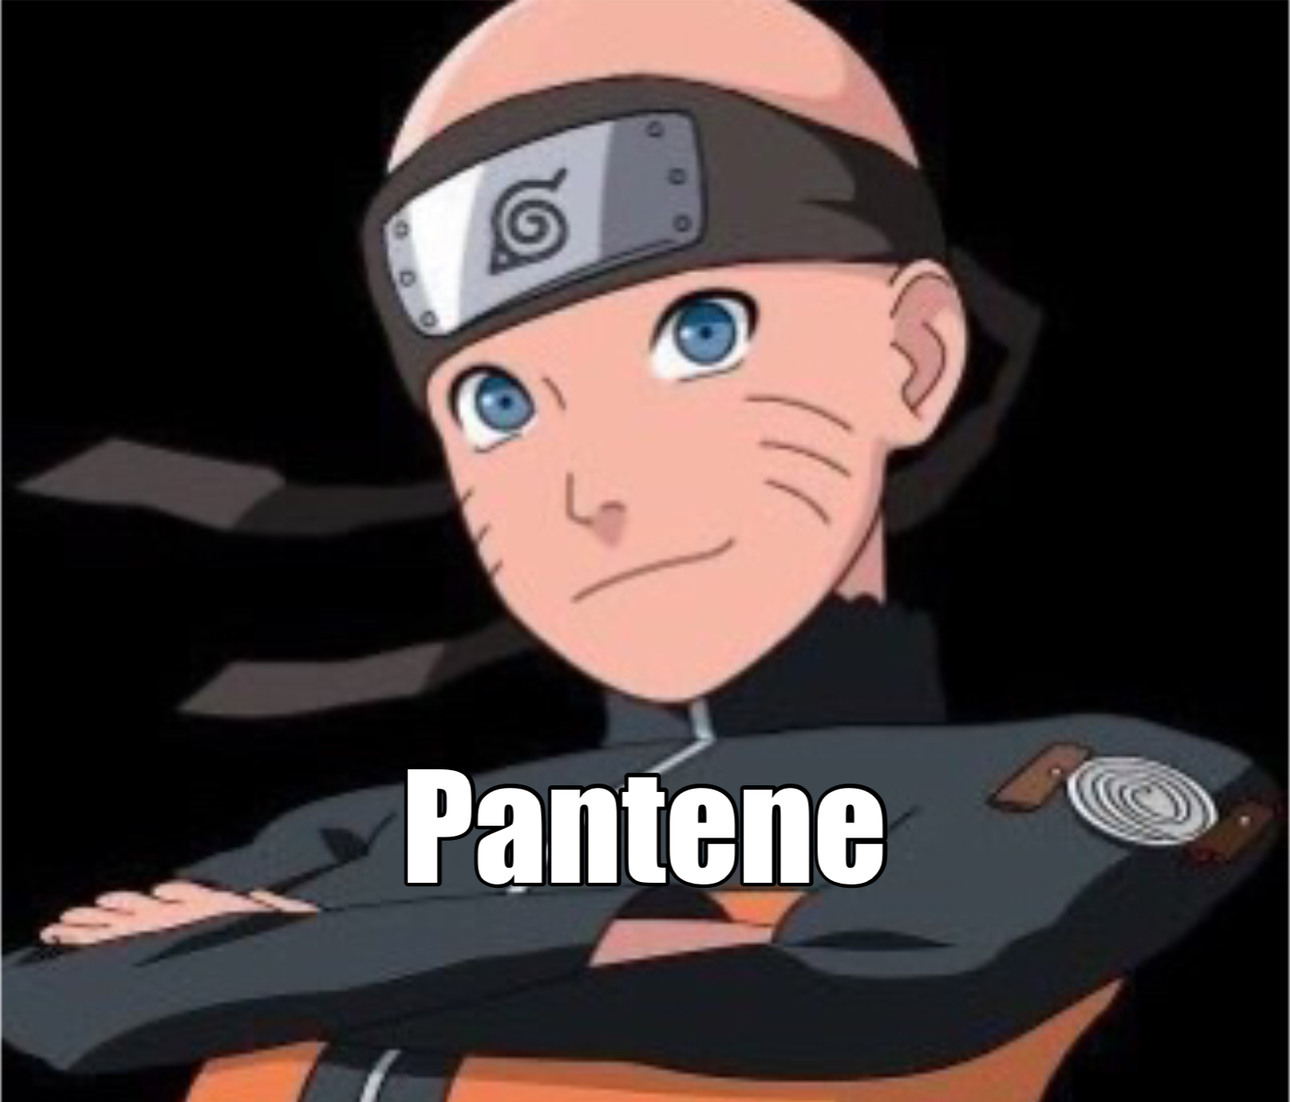 Naruto calvo - meme